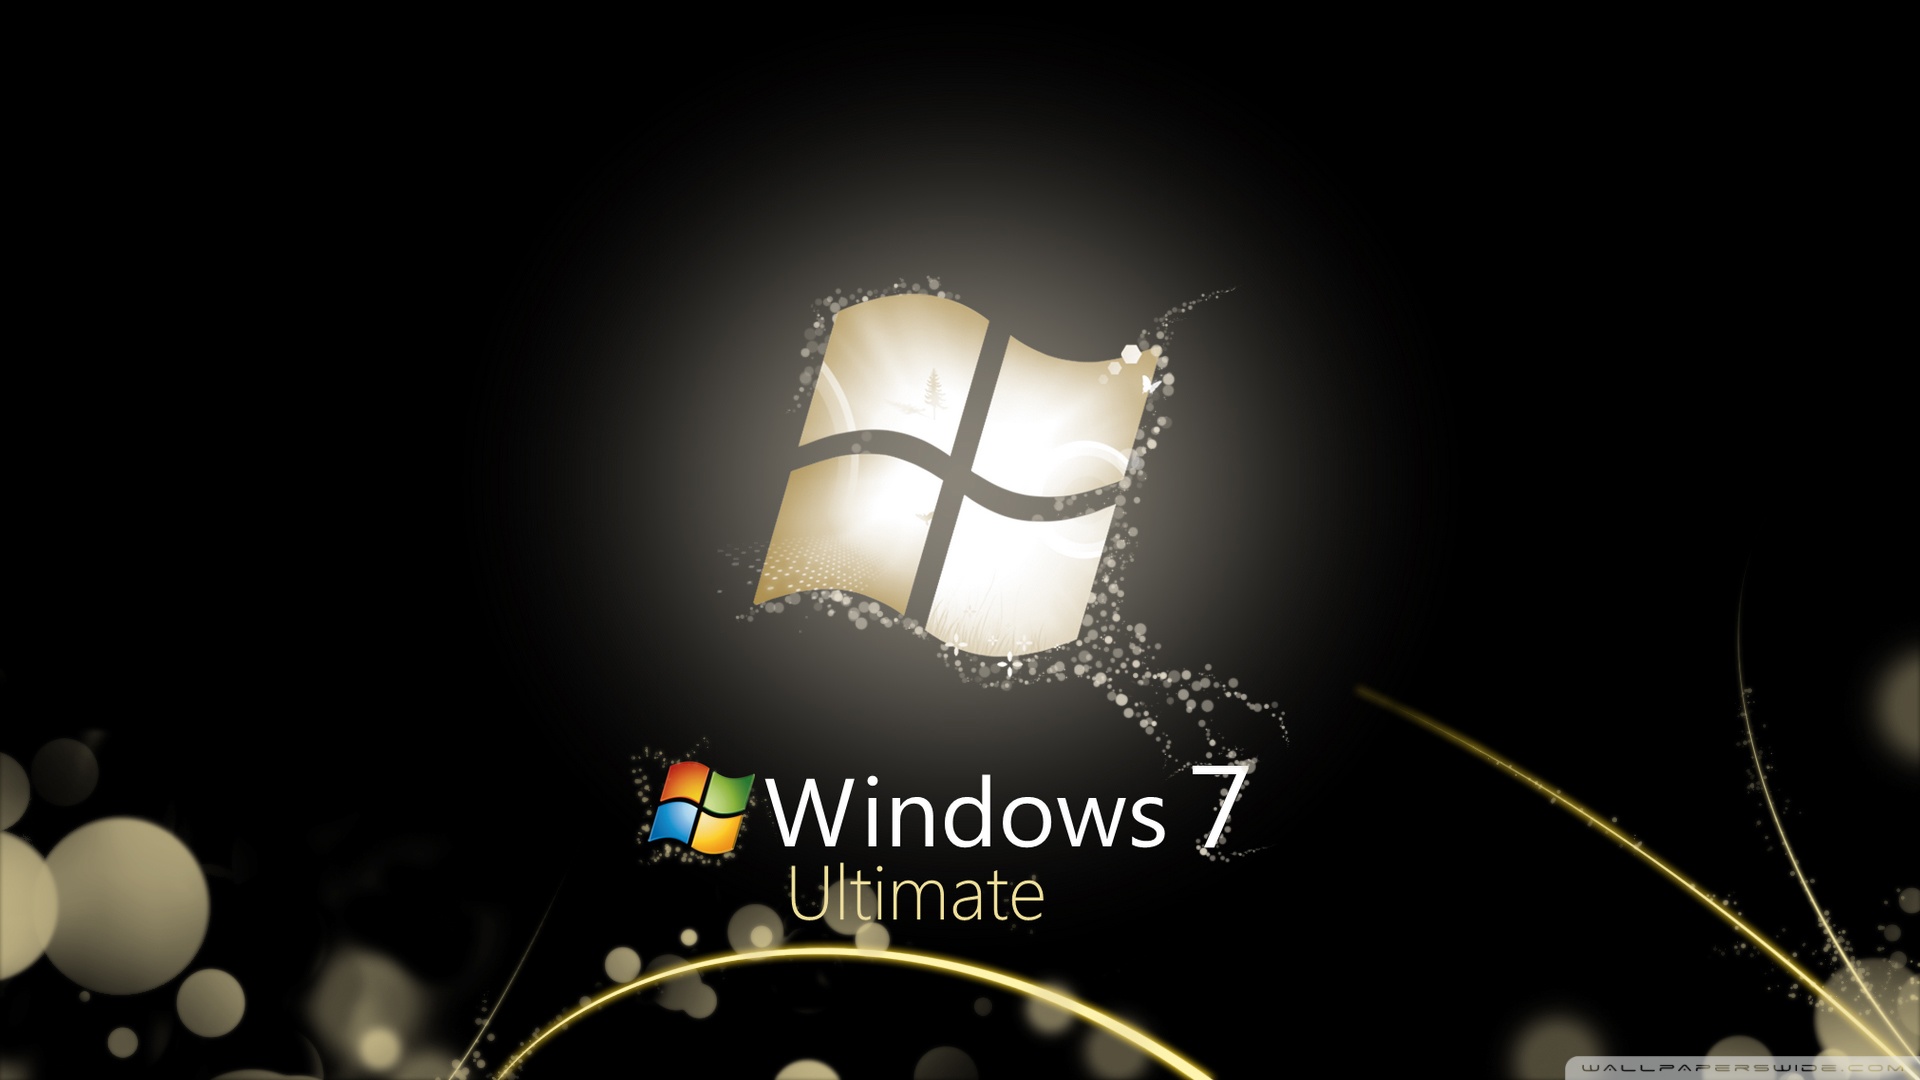 Windows 7 Ultimate Bright Black 4K HD Desktop Wallpaper For 4K